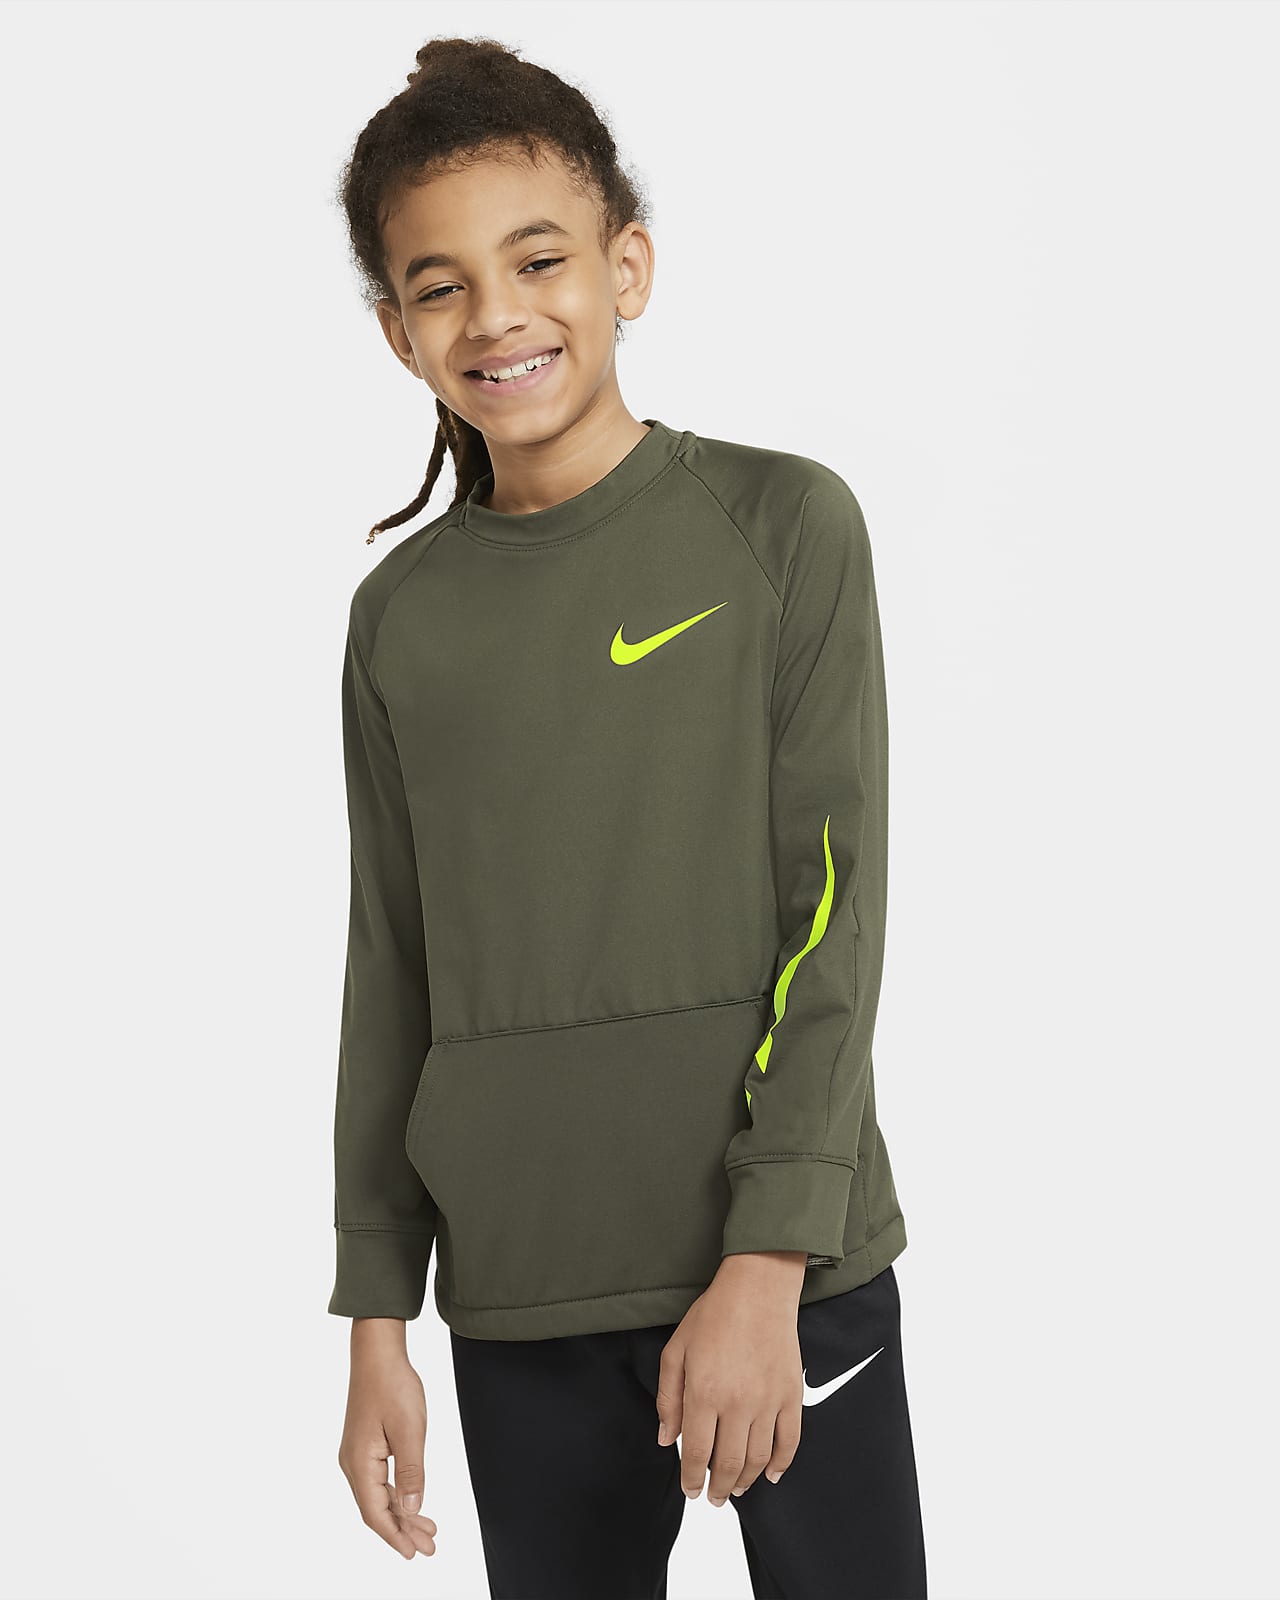 Nike Older Kids' (Boys') Fleece Training Top